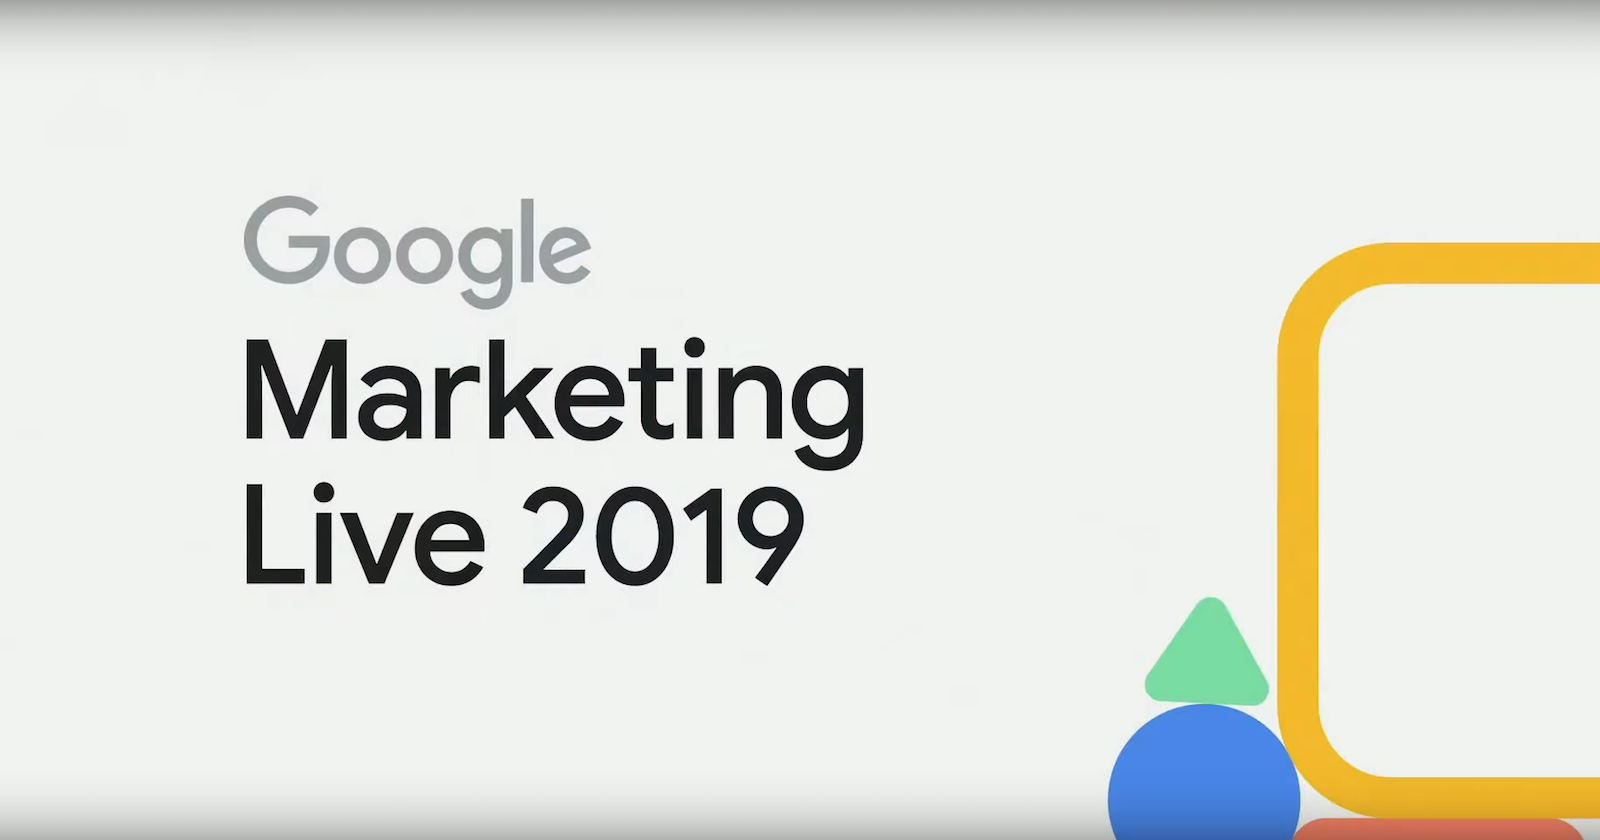 Google Marketing Live 2019